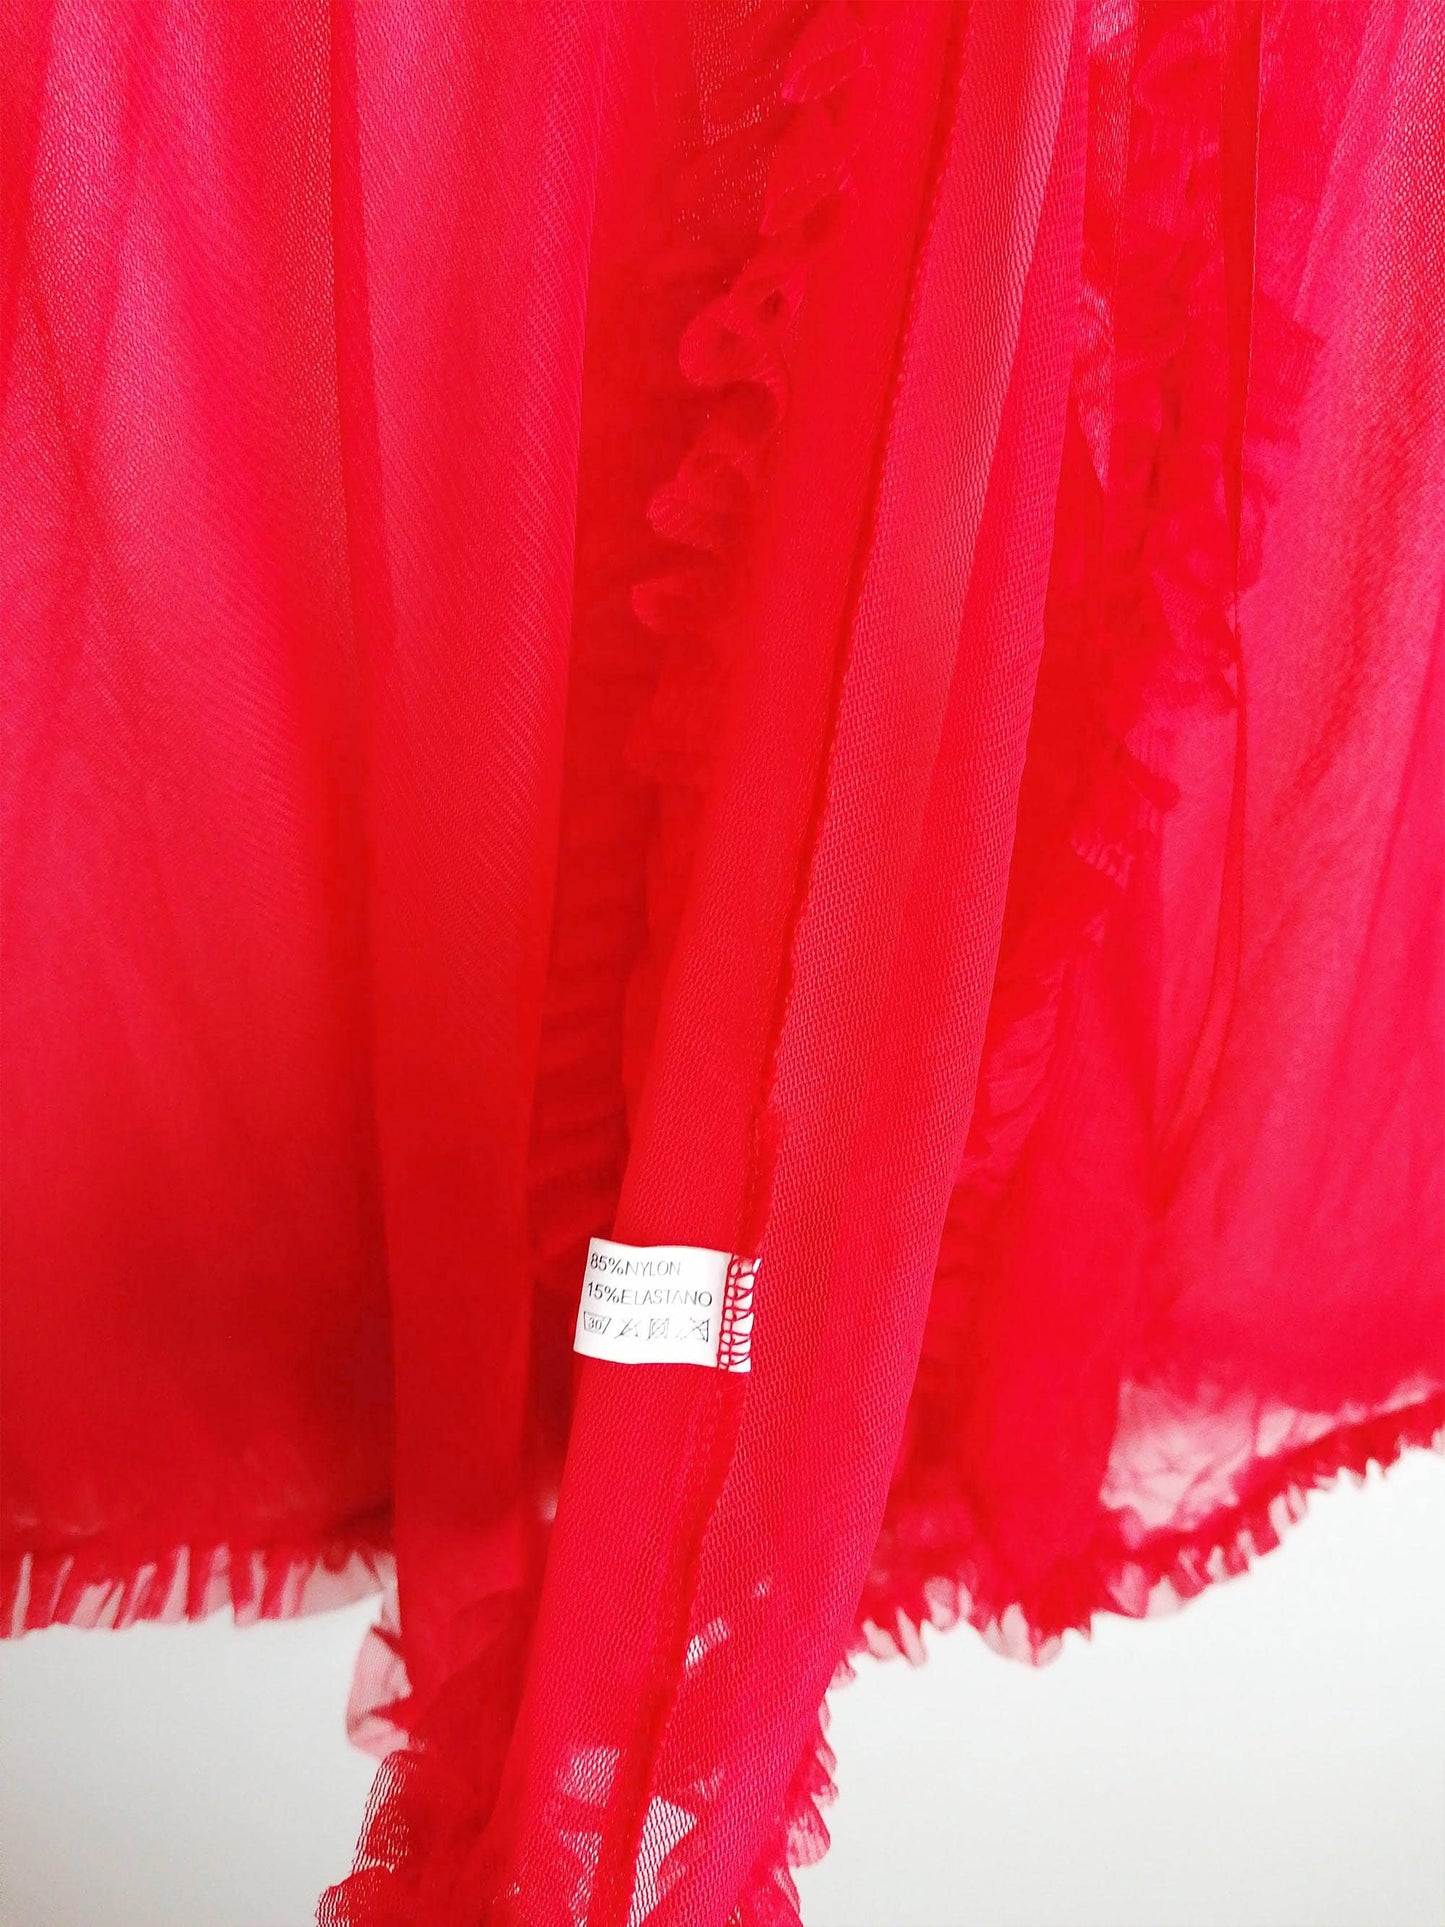 Sheer Red Tulle Lingerie Set - size S-M